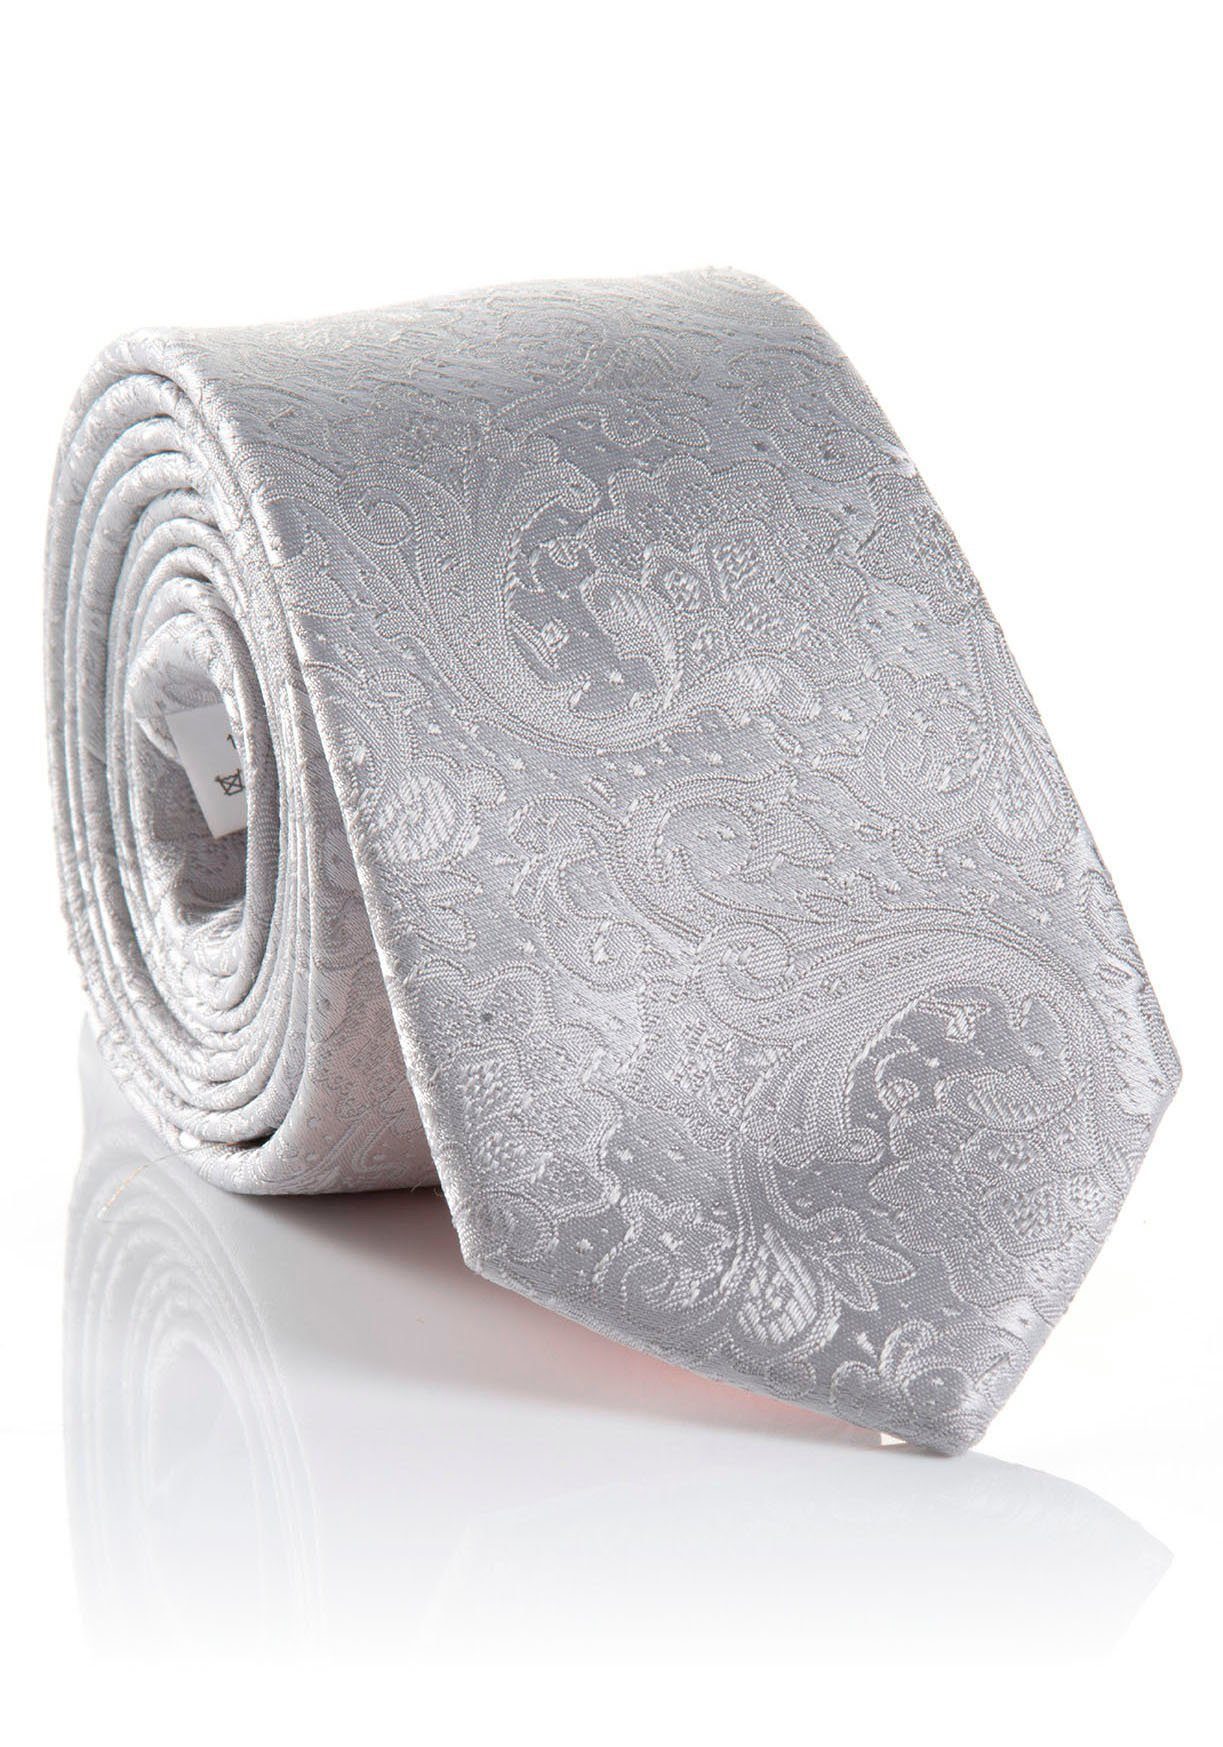 MONTI Krawatte silver reiner Paisley-Muster aus LELIO Krawatte Seide